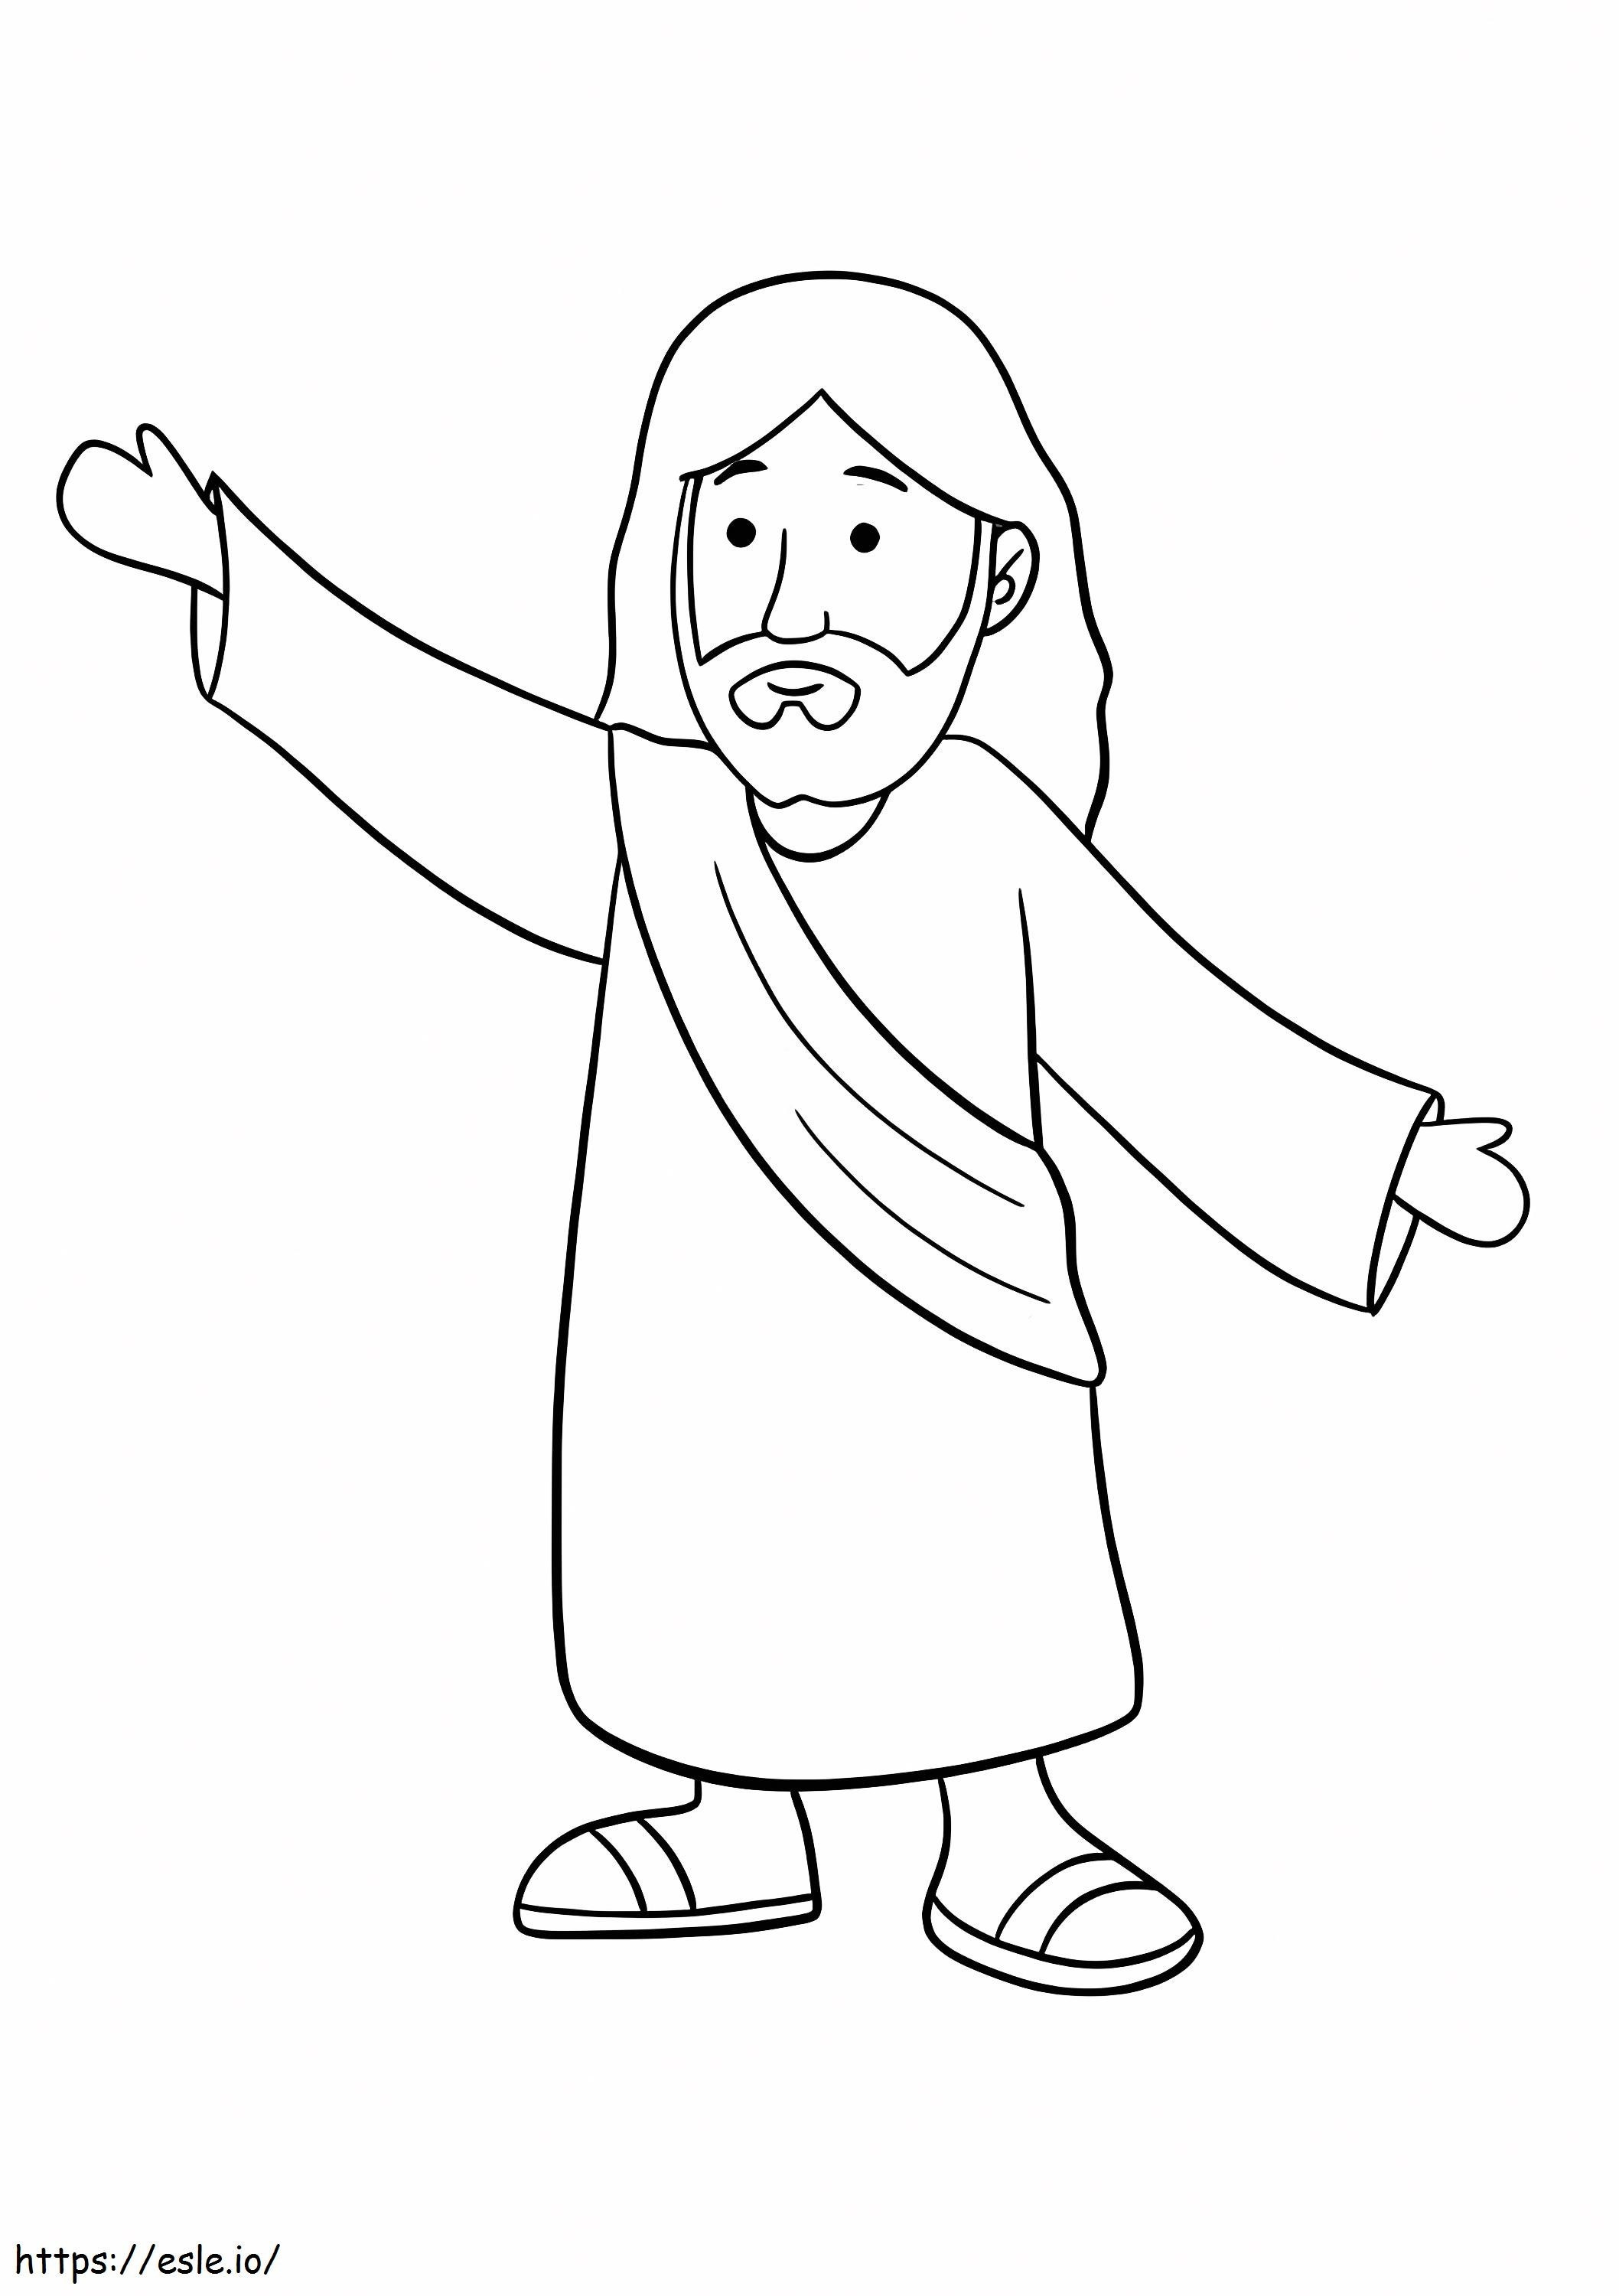 Cartoon-Jesus ausmalbilder